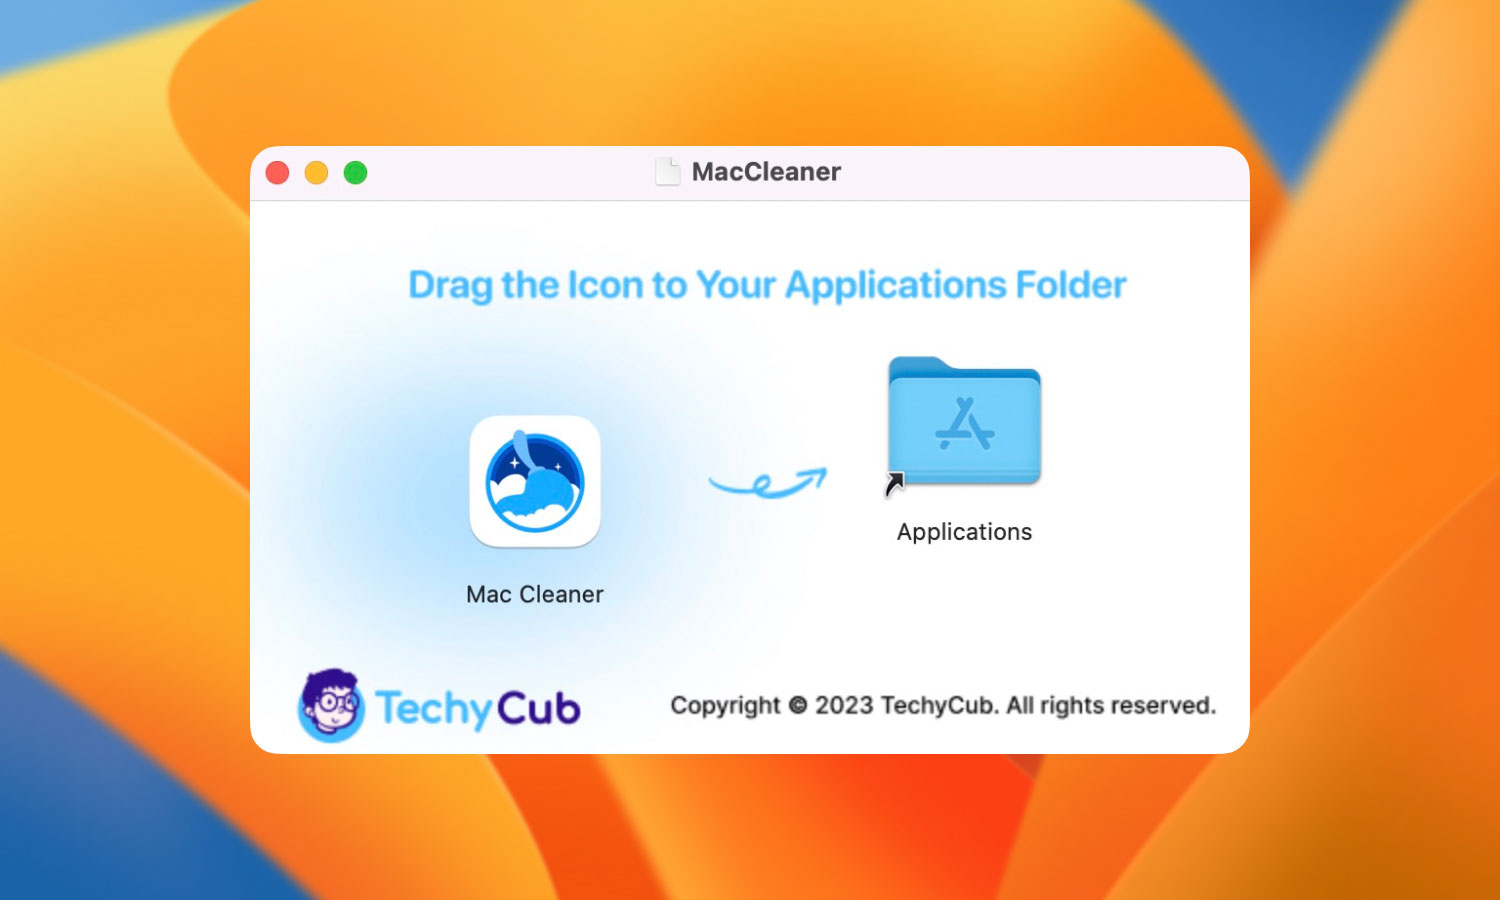 Install TechyCub Mac Cleaner